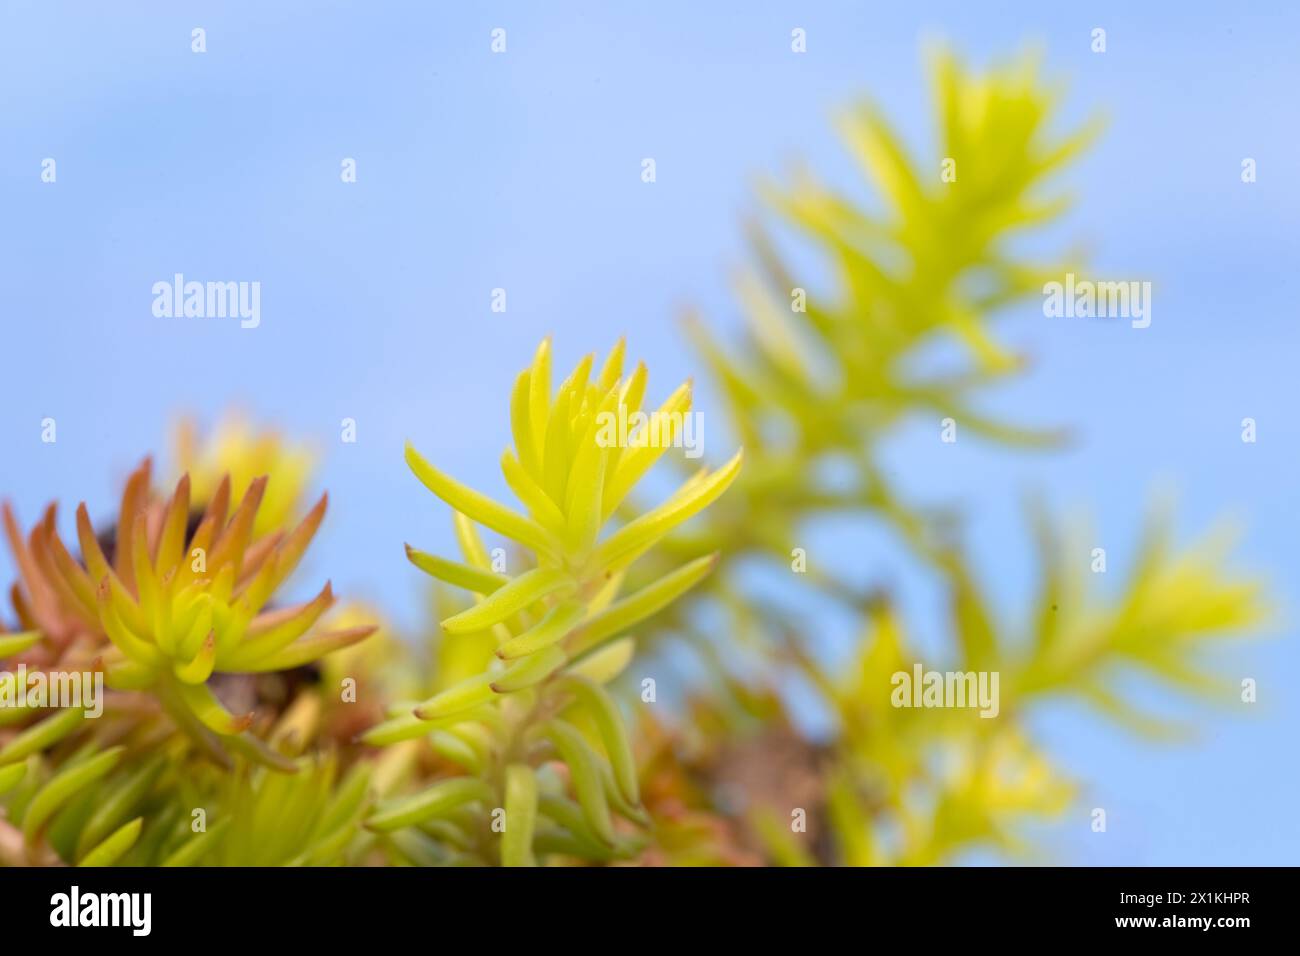 Closeup of leaves of succulent plant Sedum rupestre 'Angelina' against a sky blue background Stock Photo